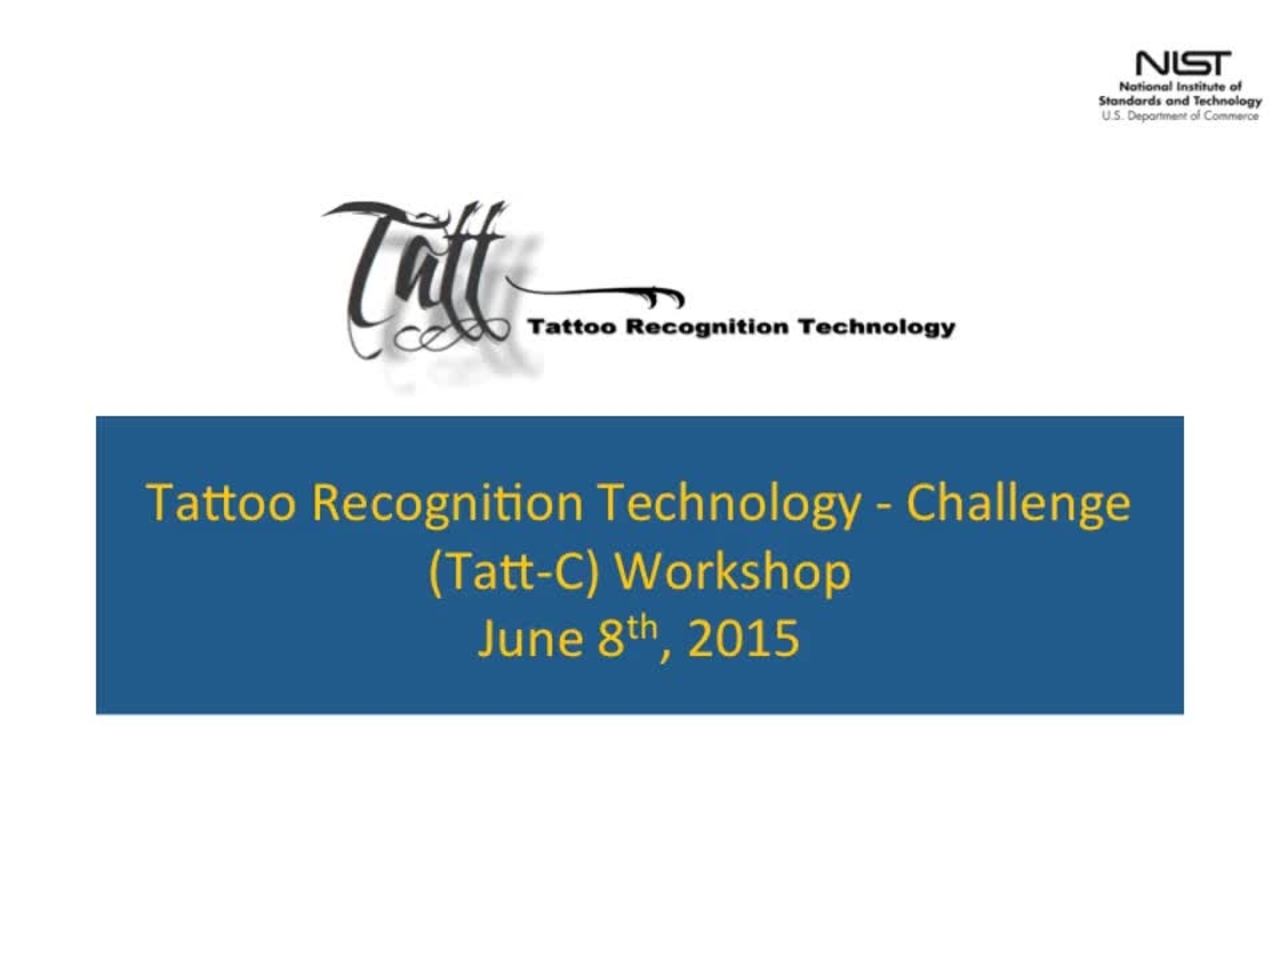 NIST Tattoo Recognition Technology Challenge (Tatt-C)